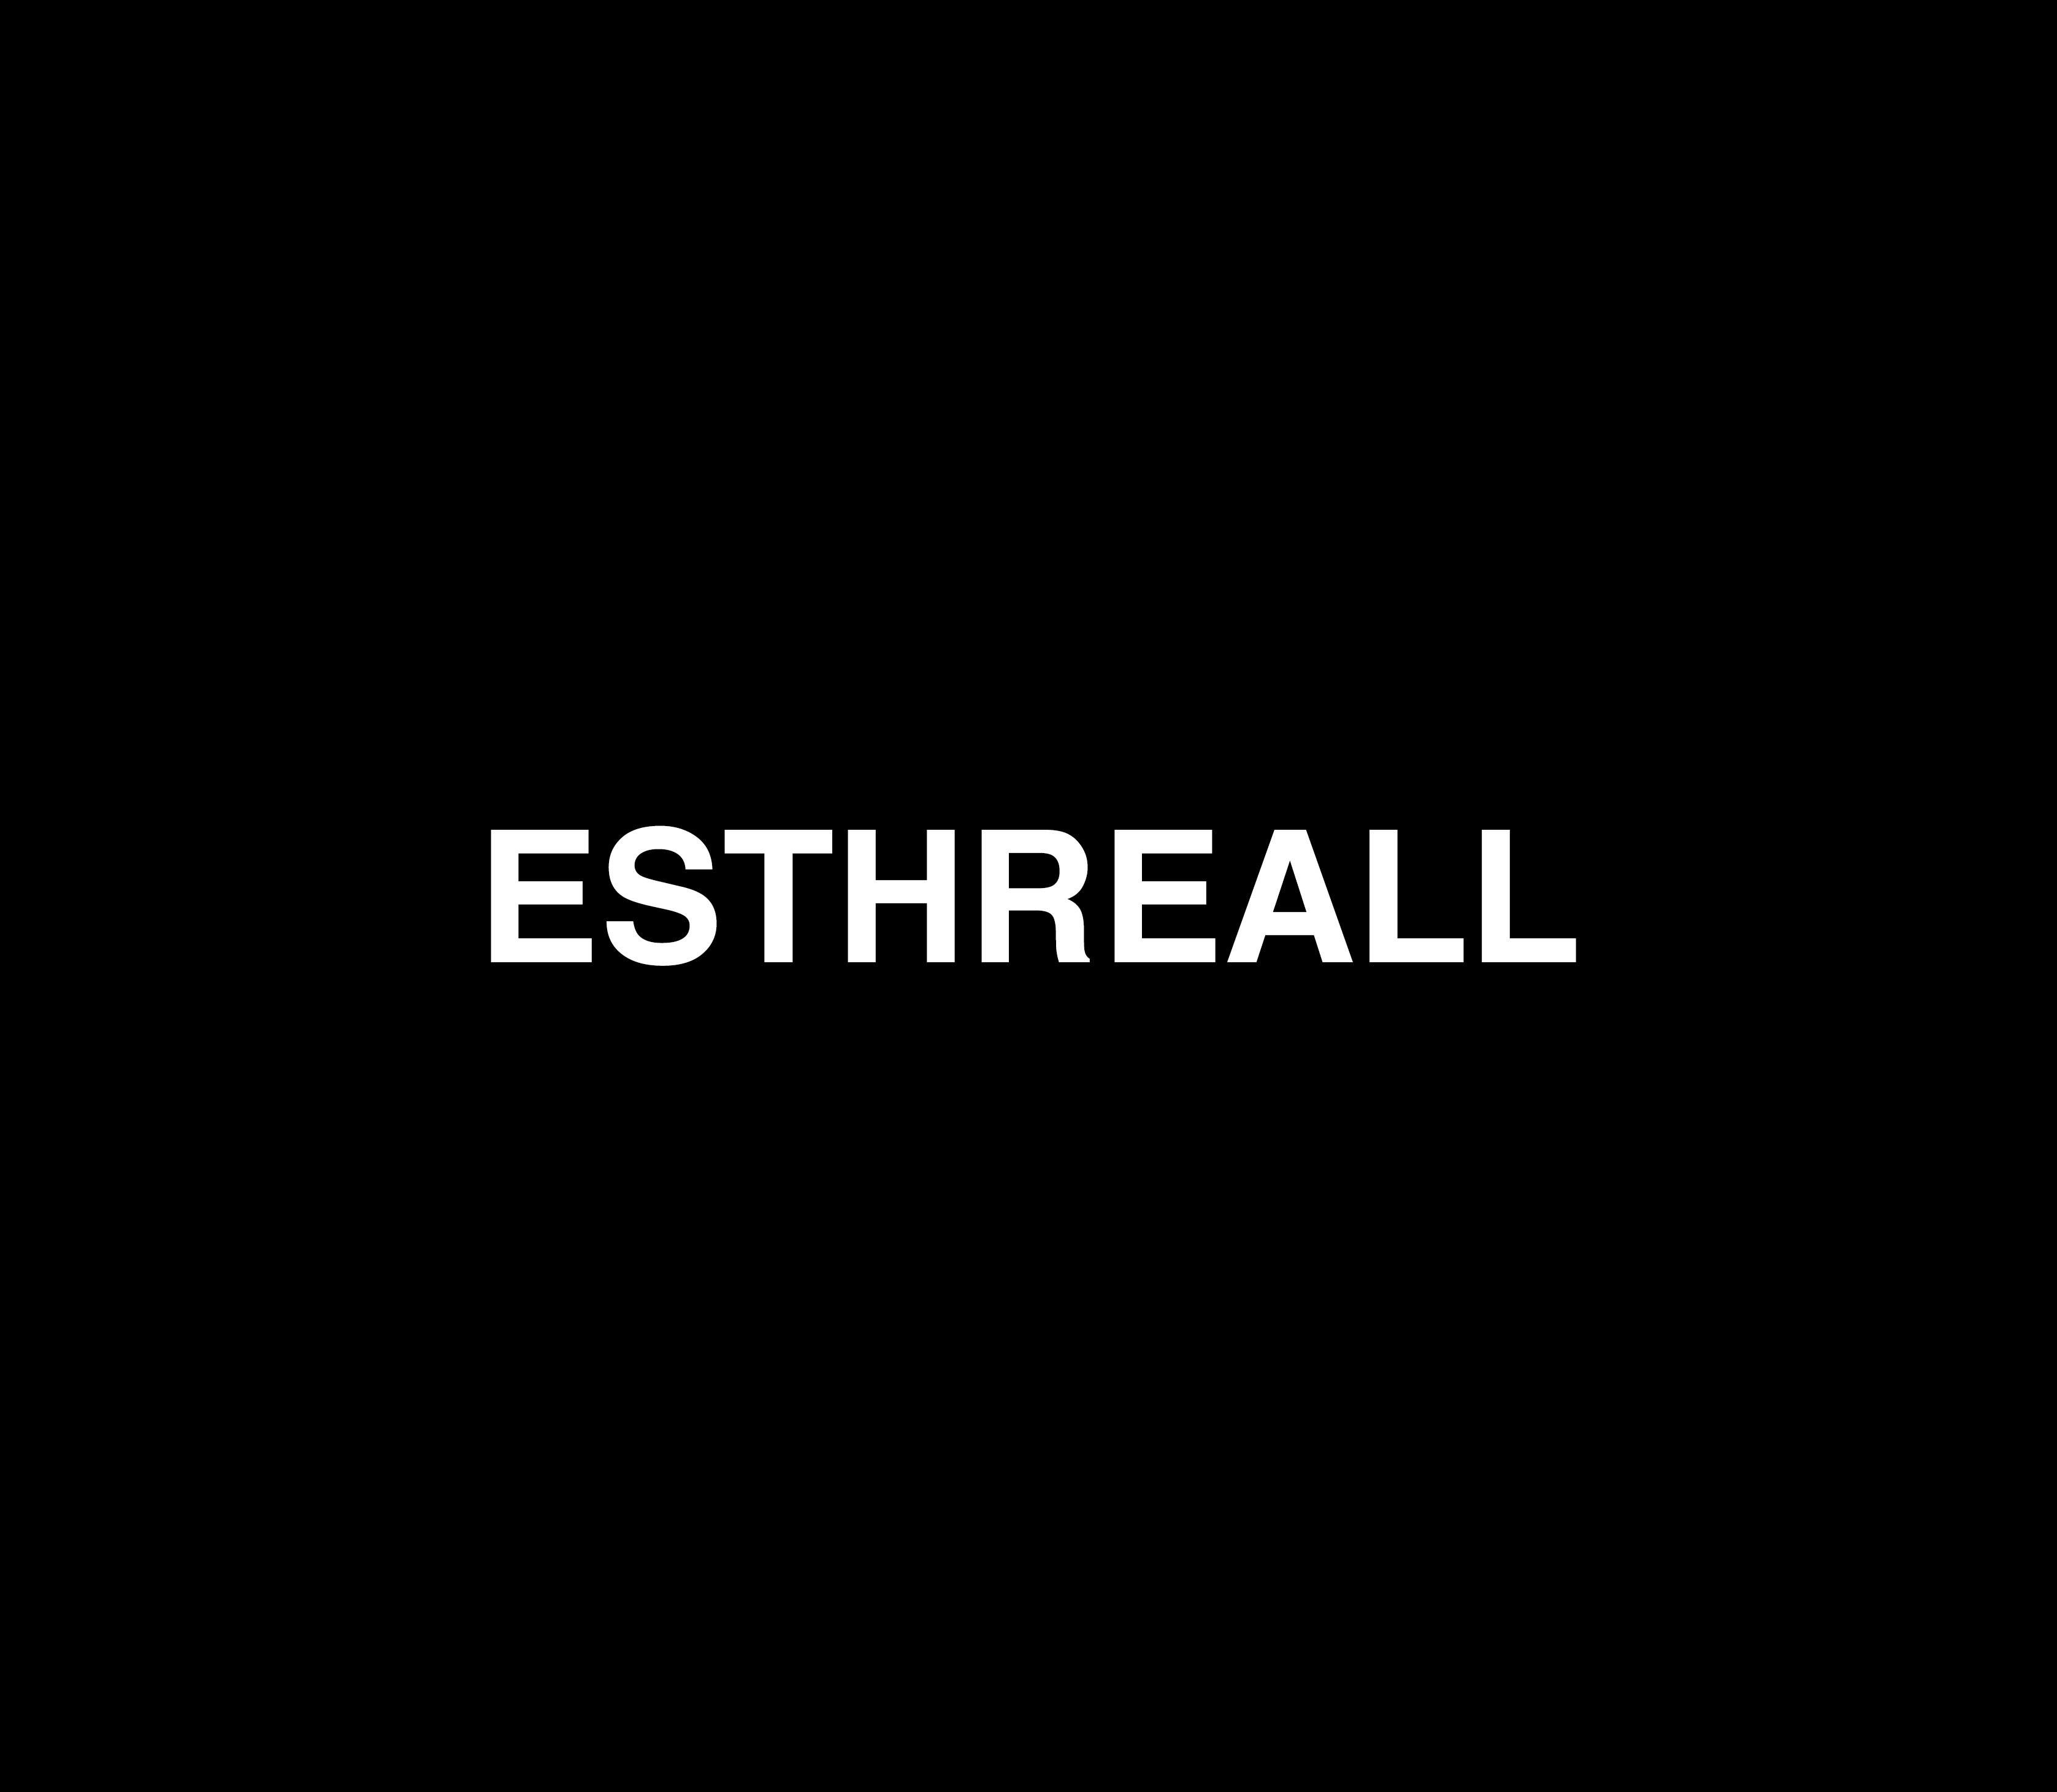 ESTHREALL